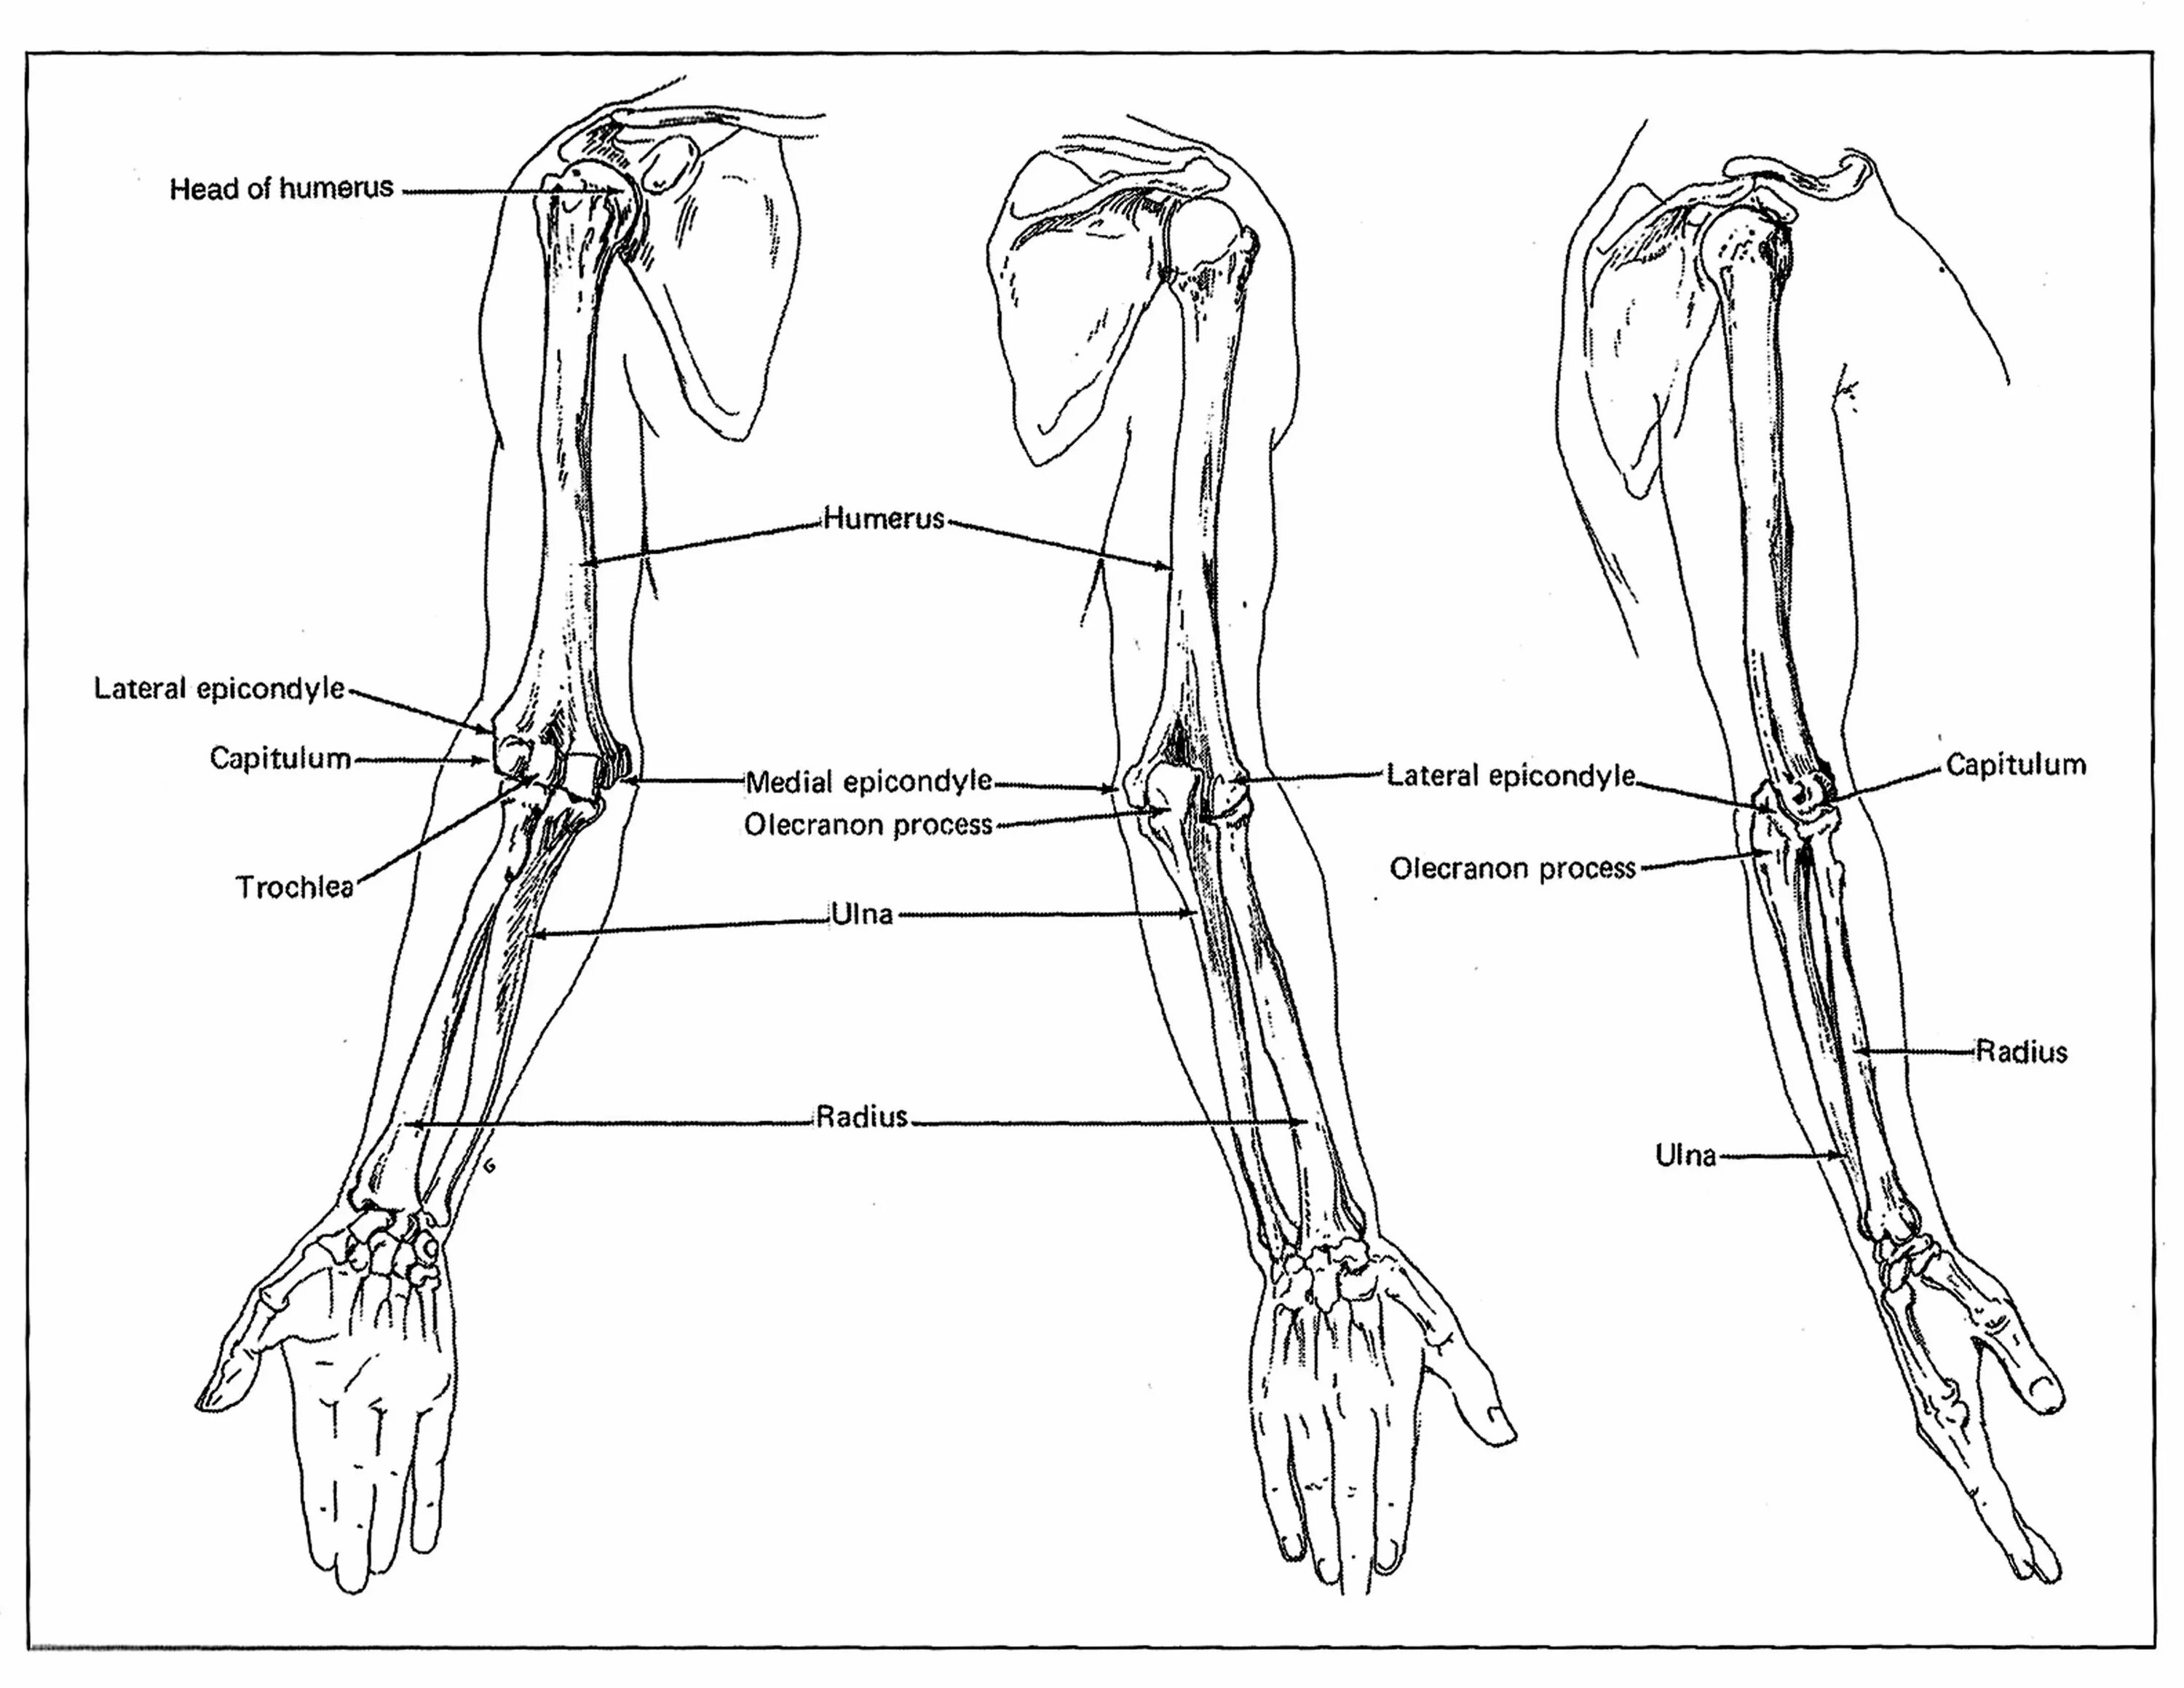 Анатомия человека скелет кости руки. Кости предплечья анатомия. Анатомия предплечья человека скелет. Строение предплечья руки человека кости.